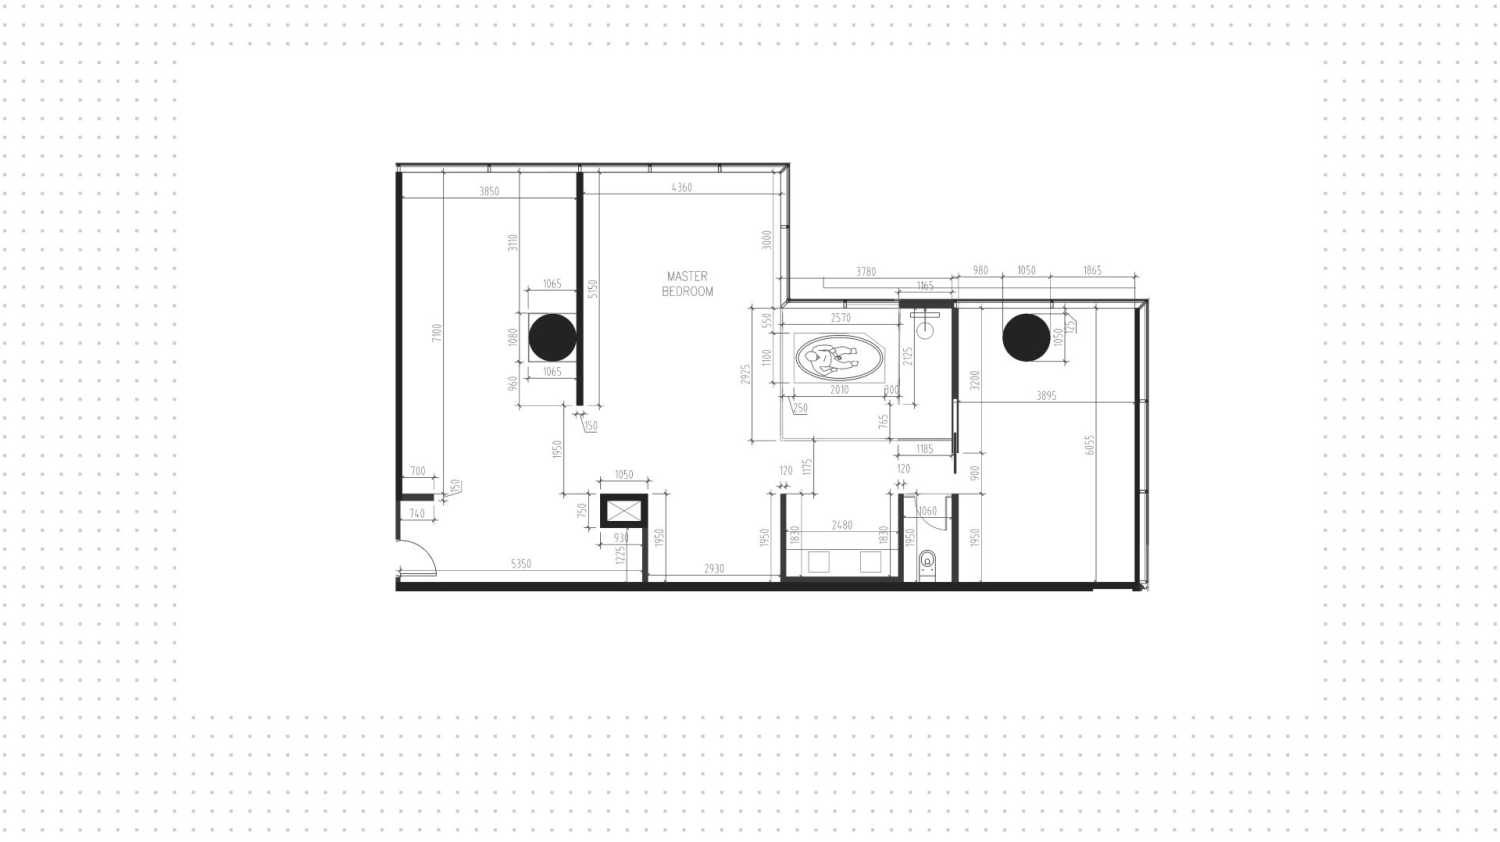 3-bedrooms apartment-0-2